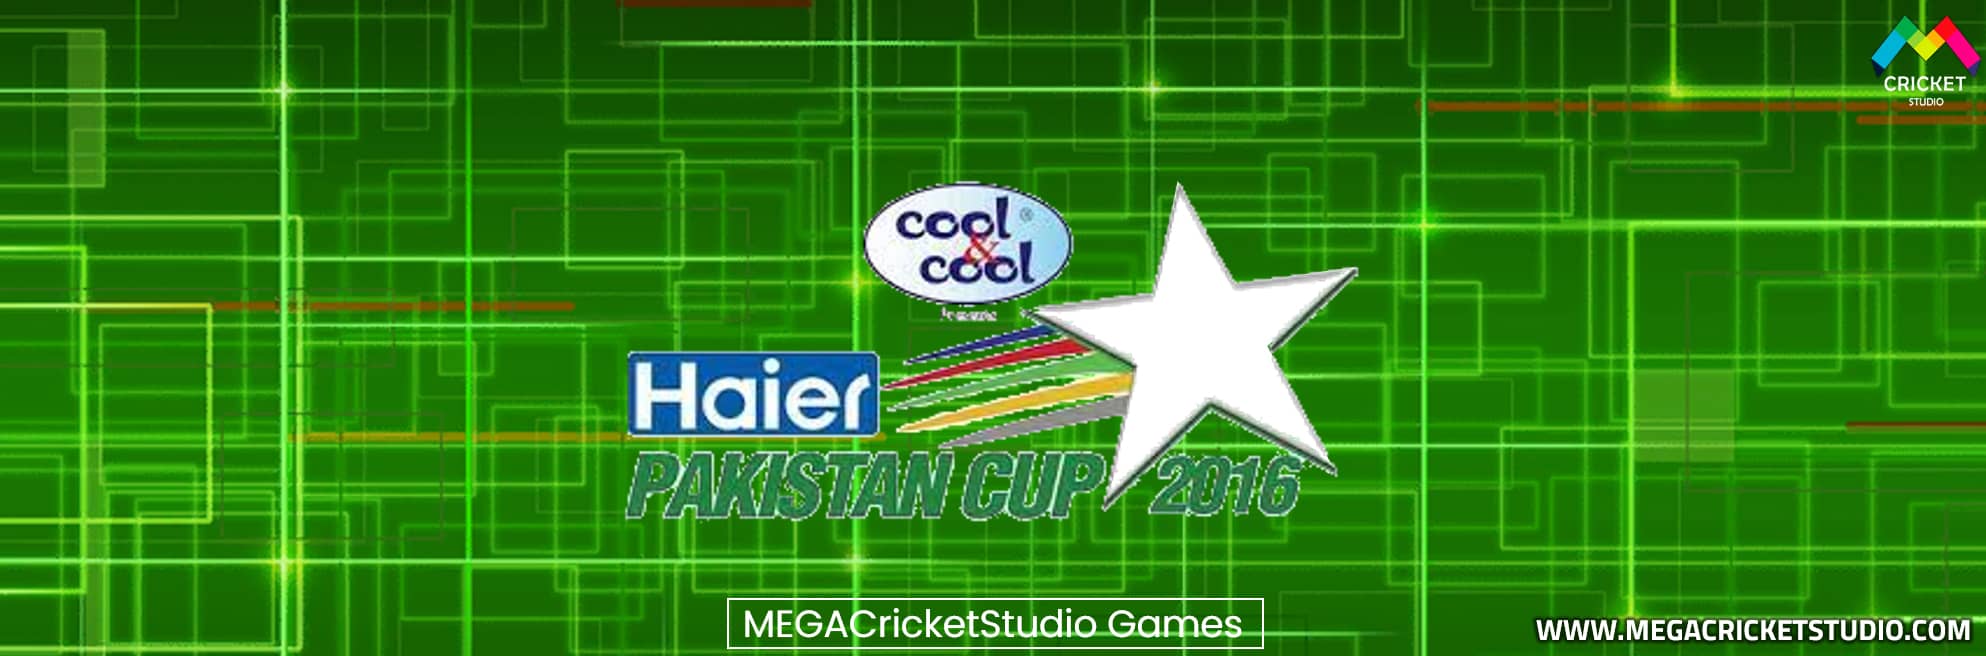 HAIER PAKISTAN CUP 2016 Patch for EA Cricket 07